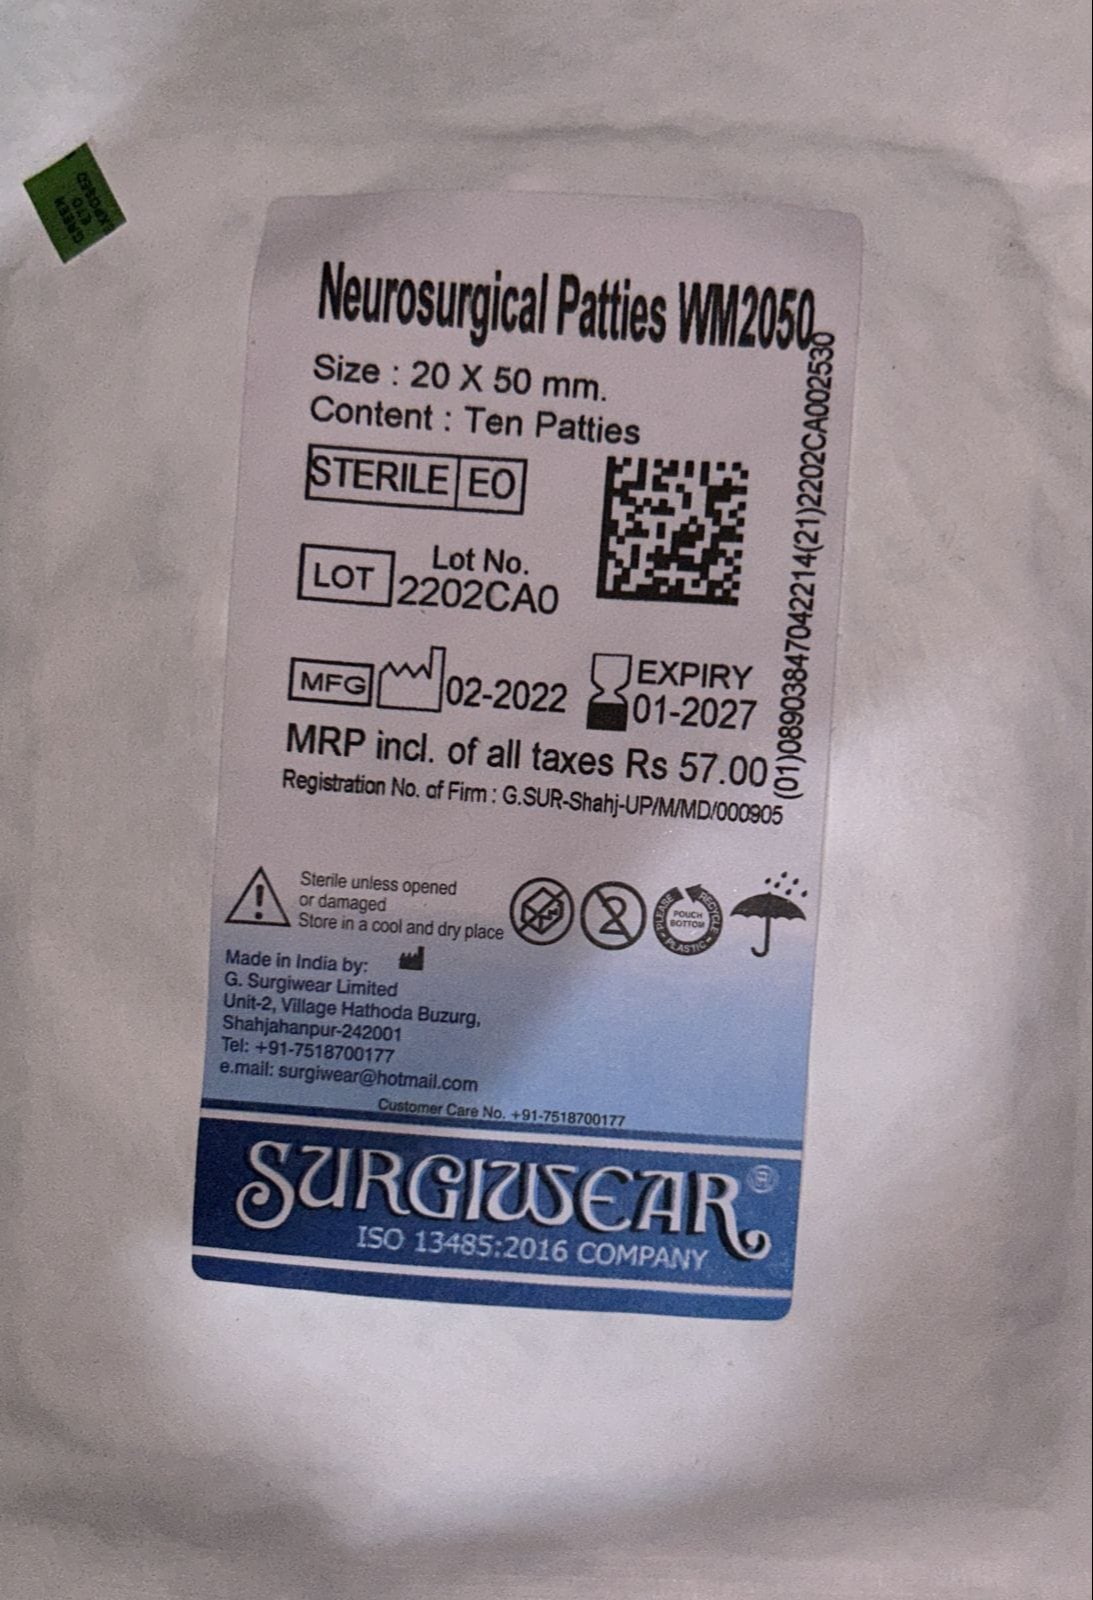 Surgiwear Neurosurgical Patties WM2030